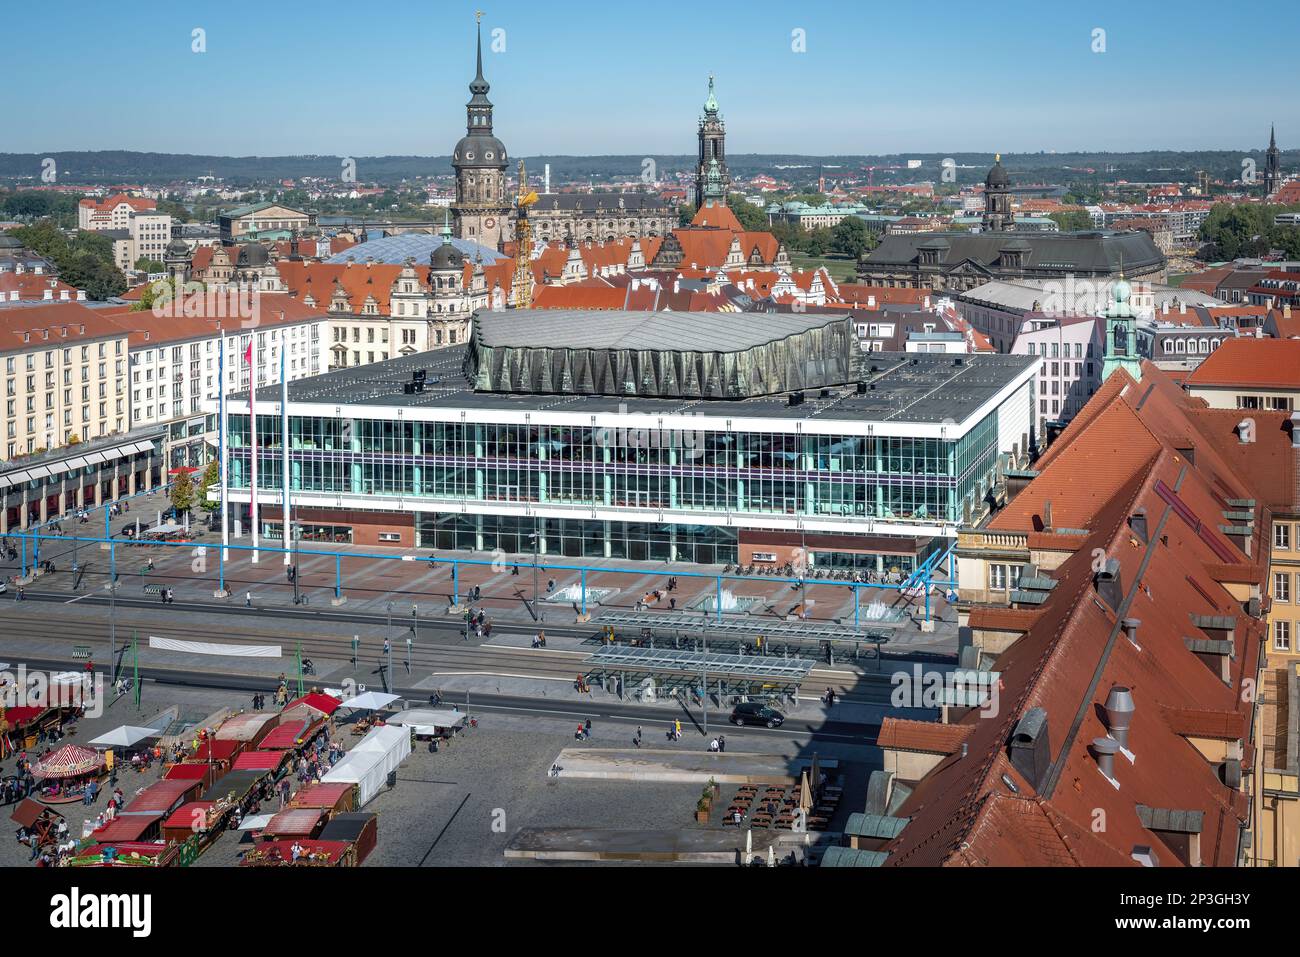 Veduta aerea del Palazzo della Cultura (Kulturpalast) in Piazza Altmarkt - Dresda, Sassonia, Germania Foto Stock